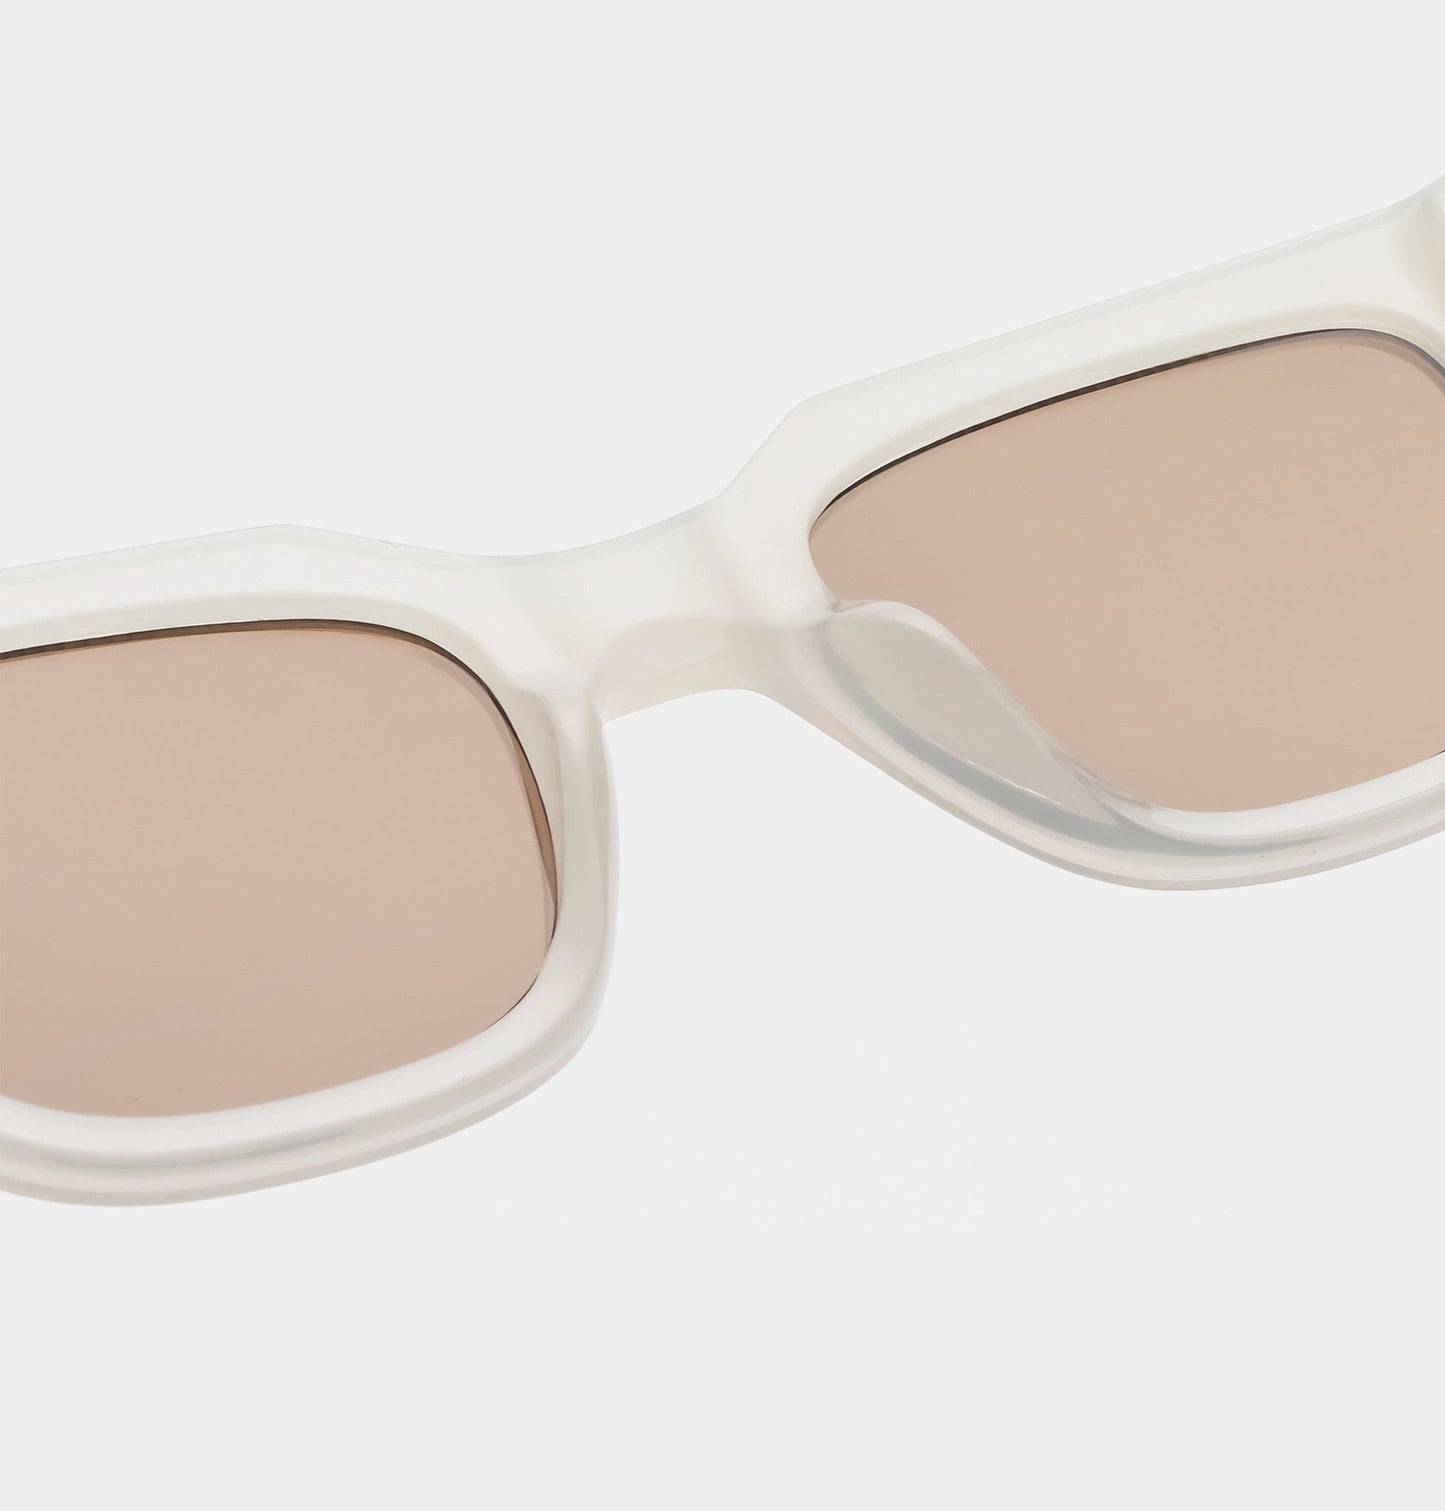 Kaws - Cream Bone Sunglasses